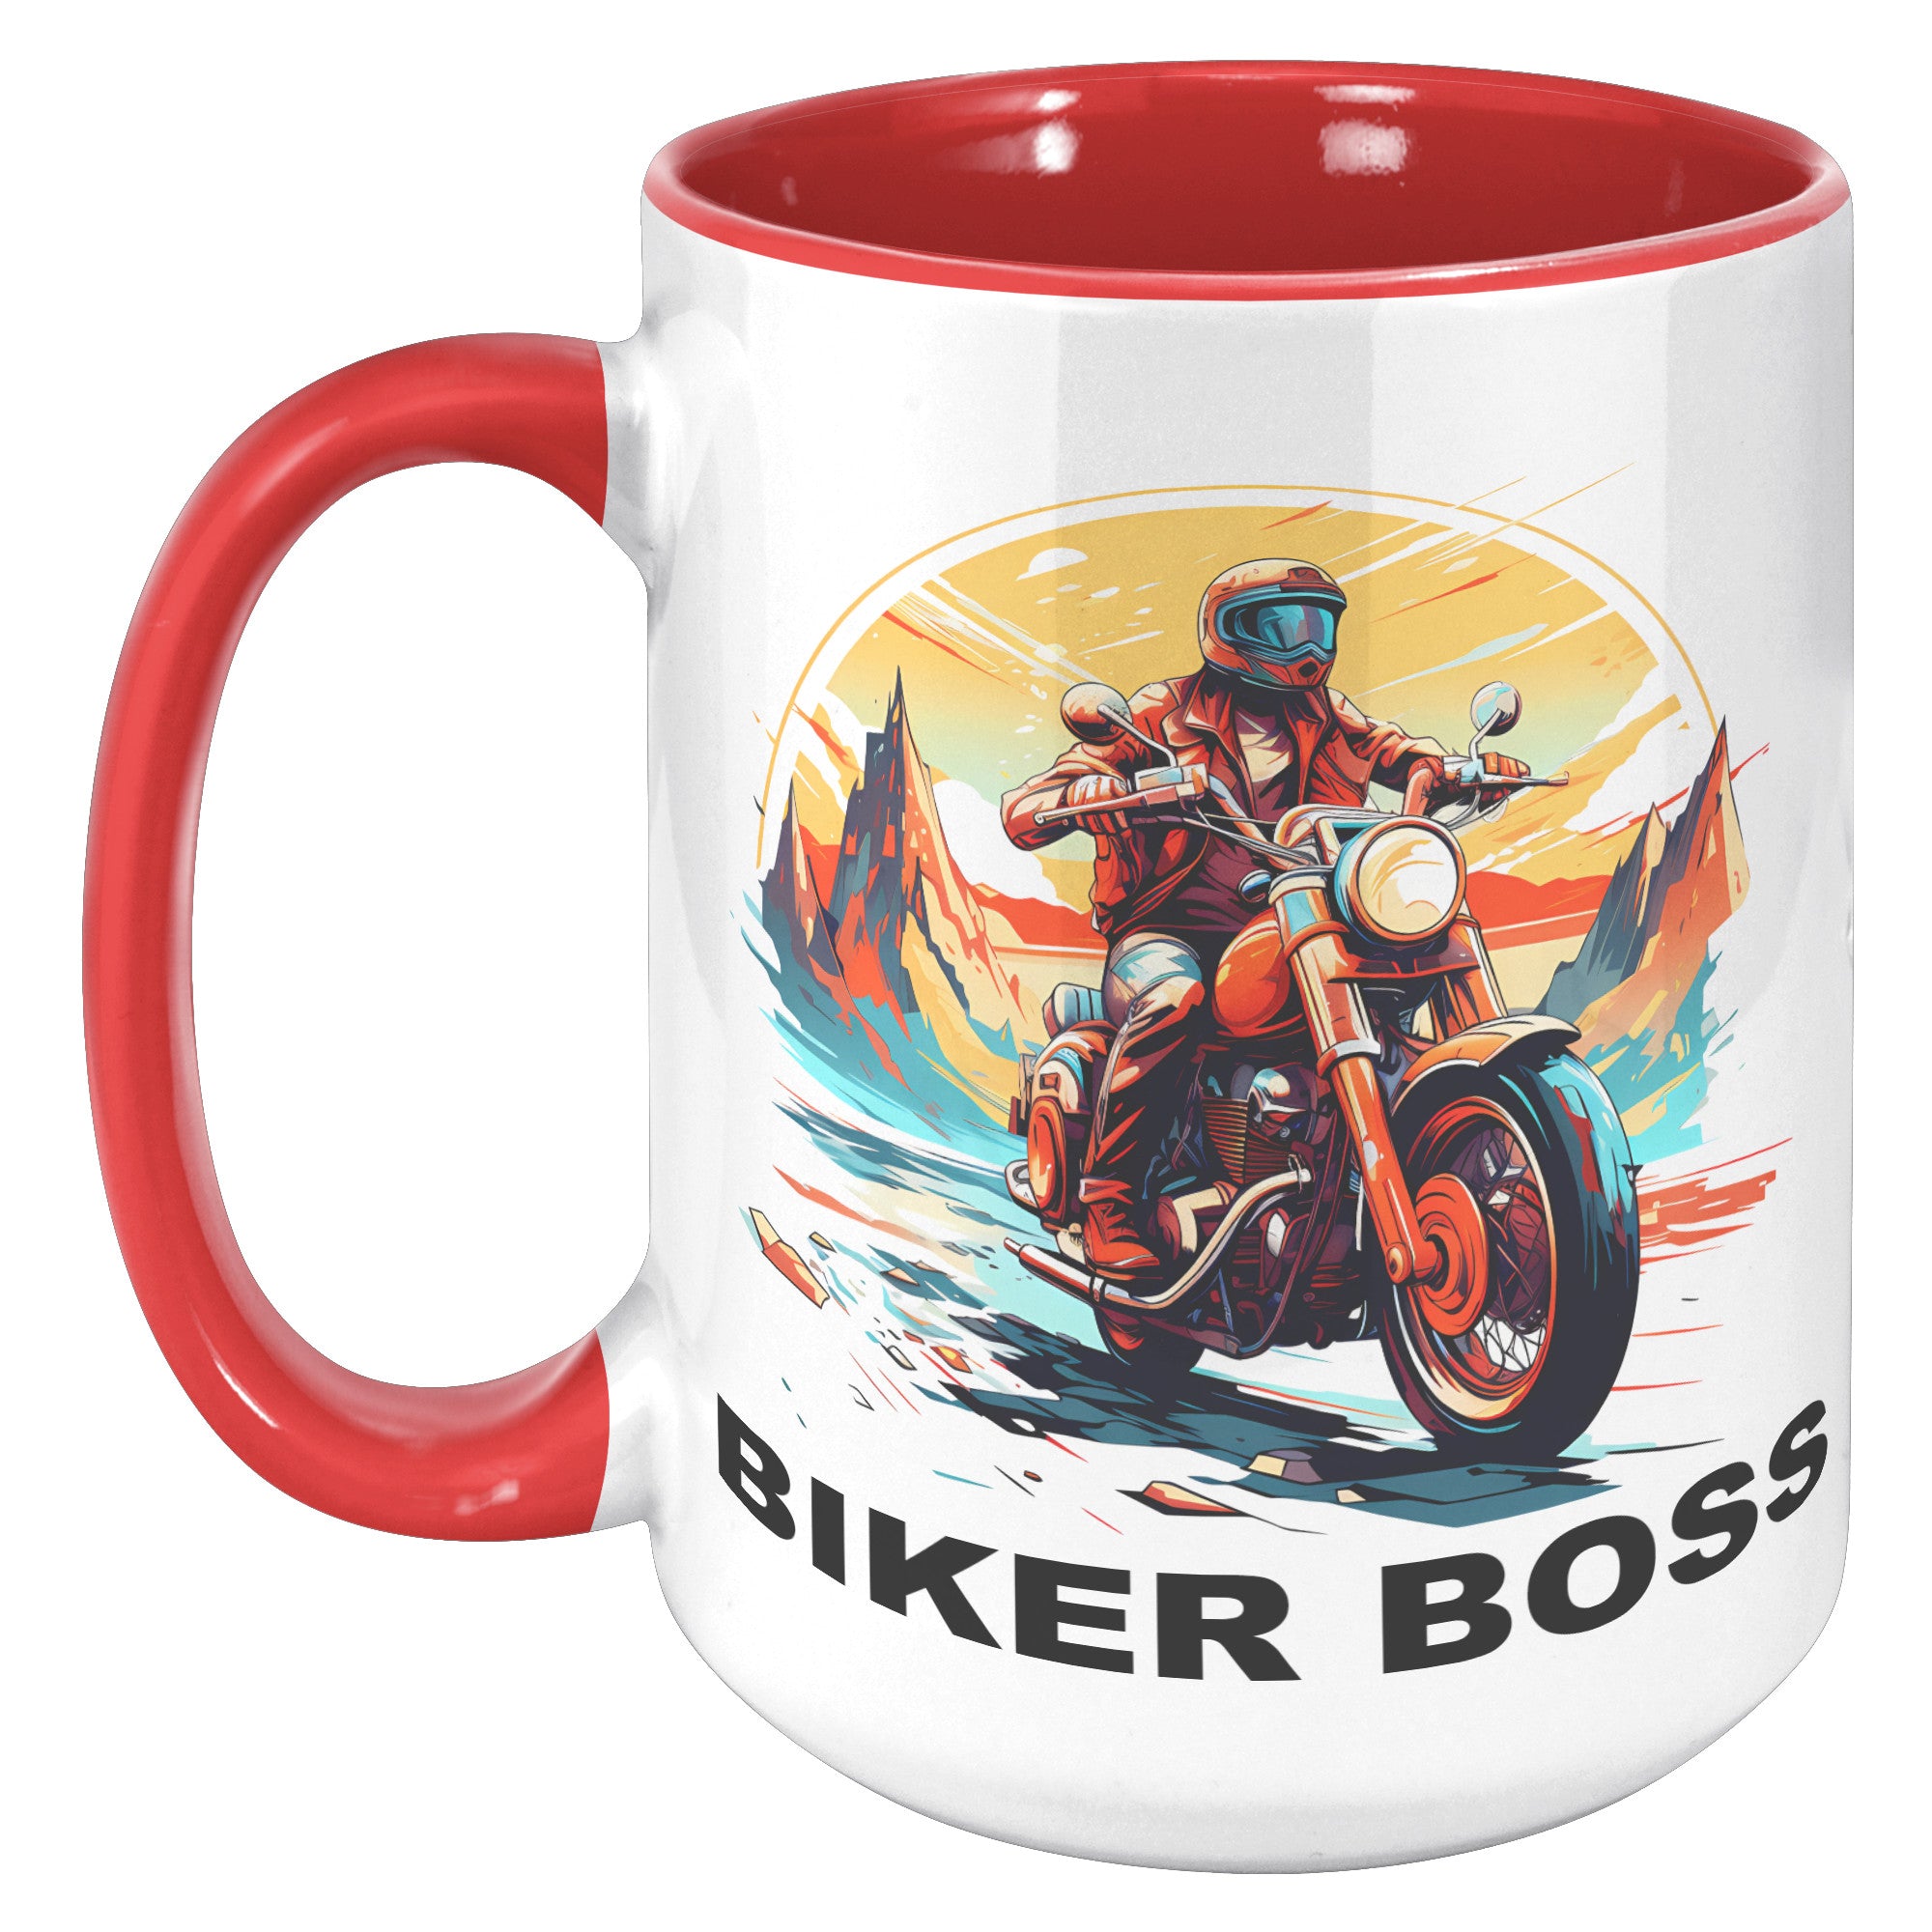 Biker Boss